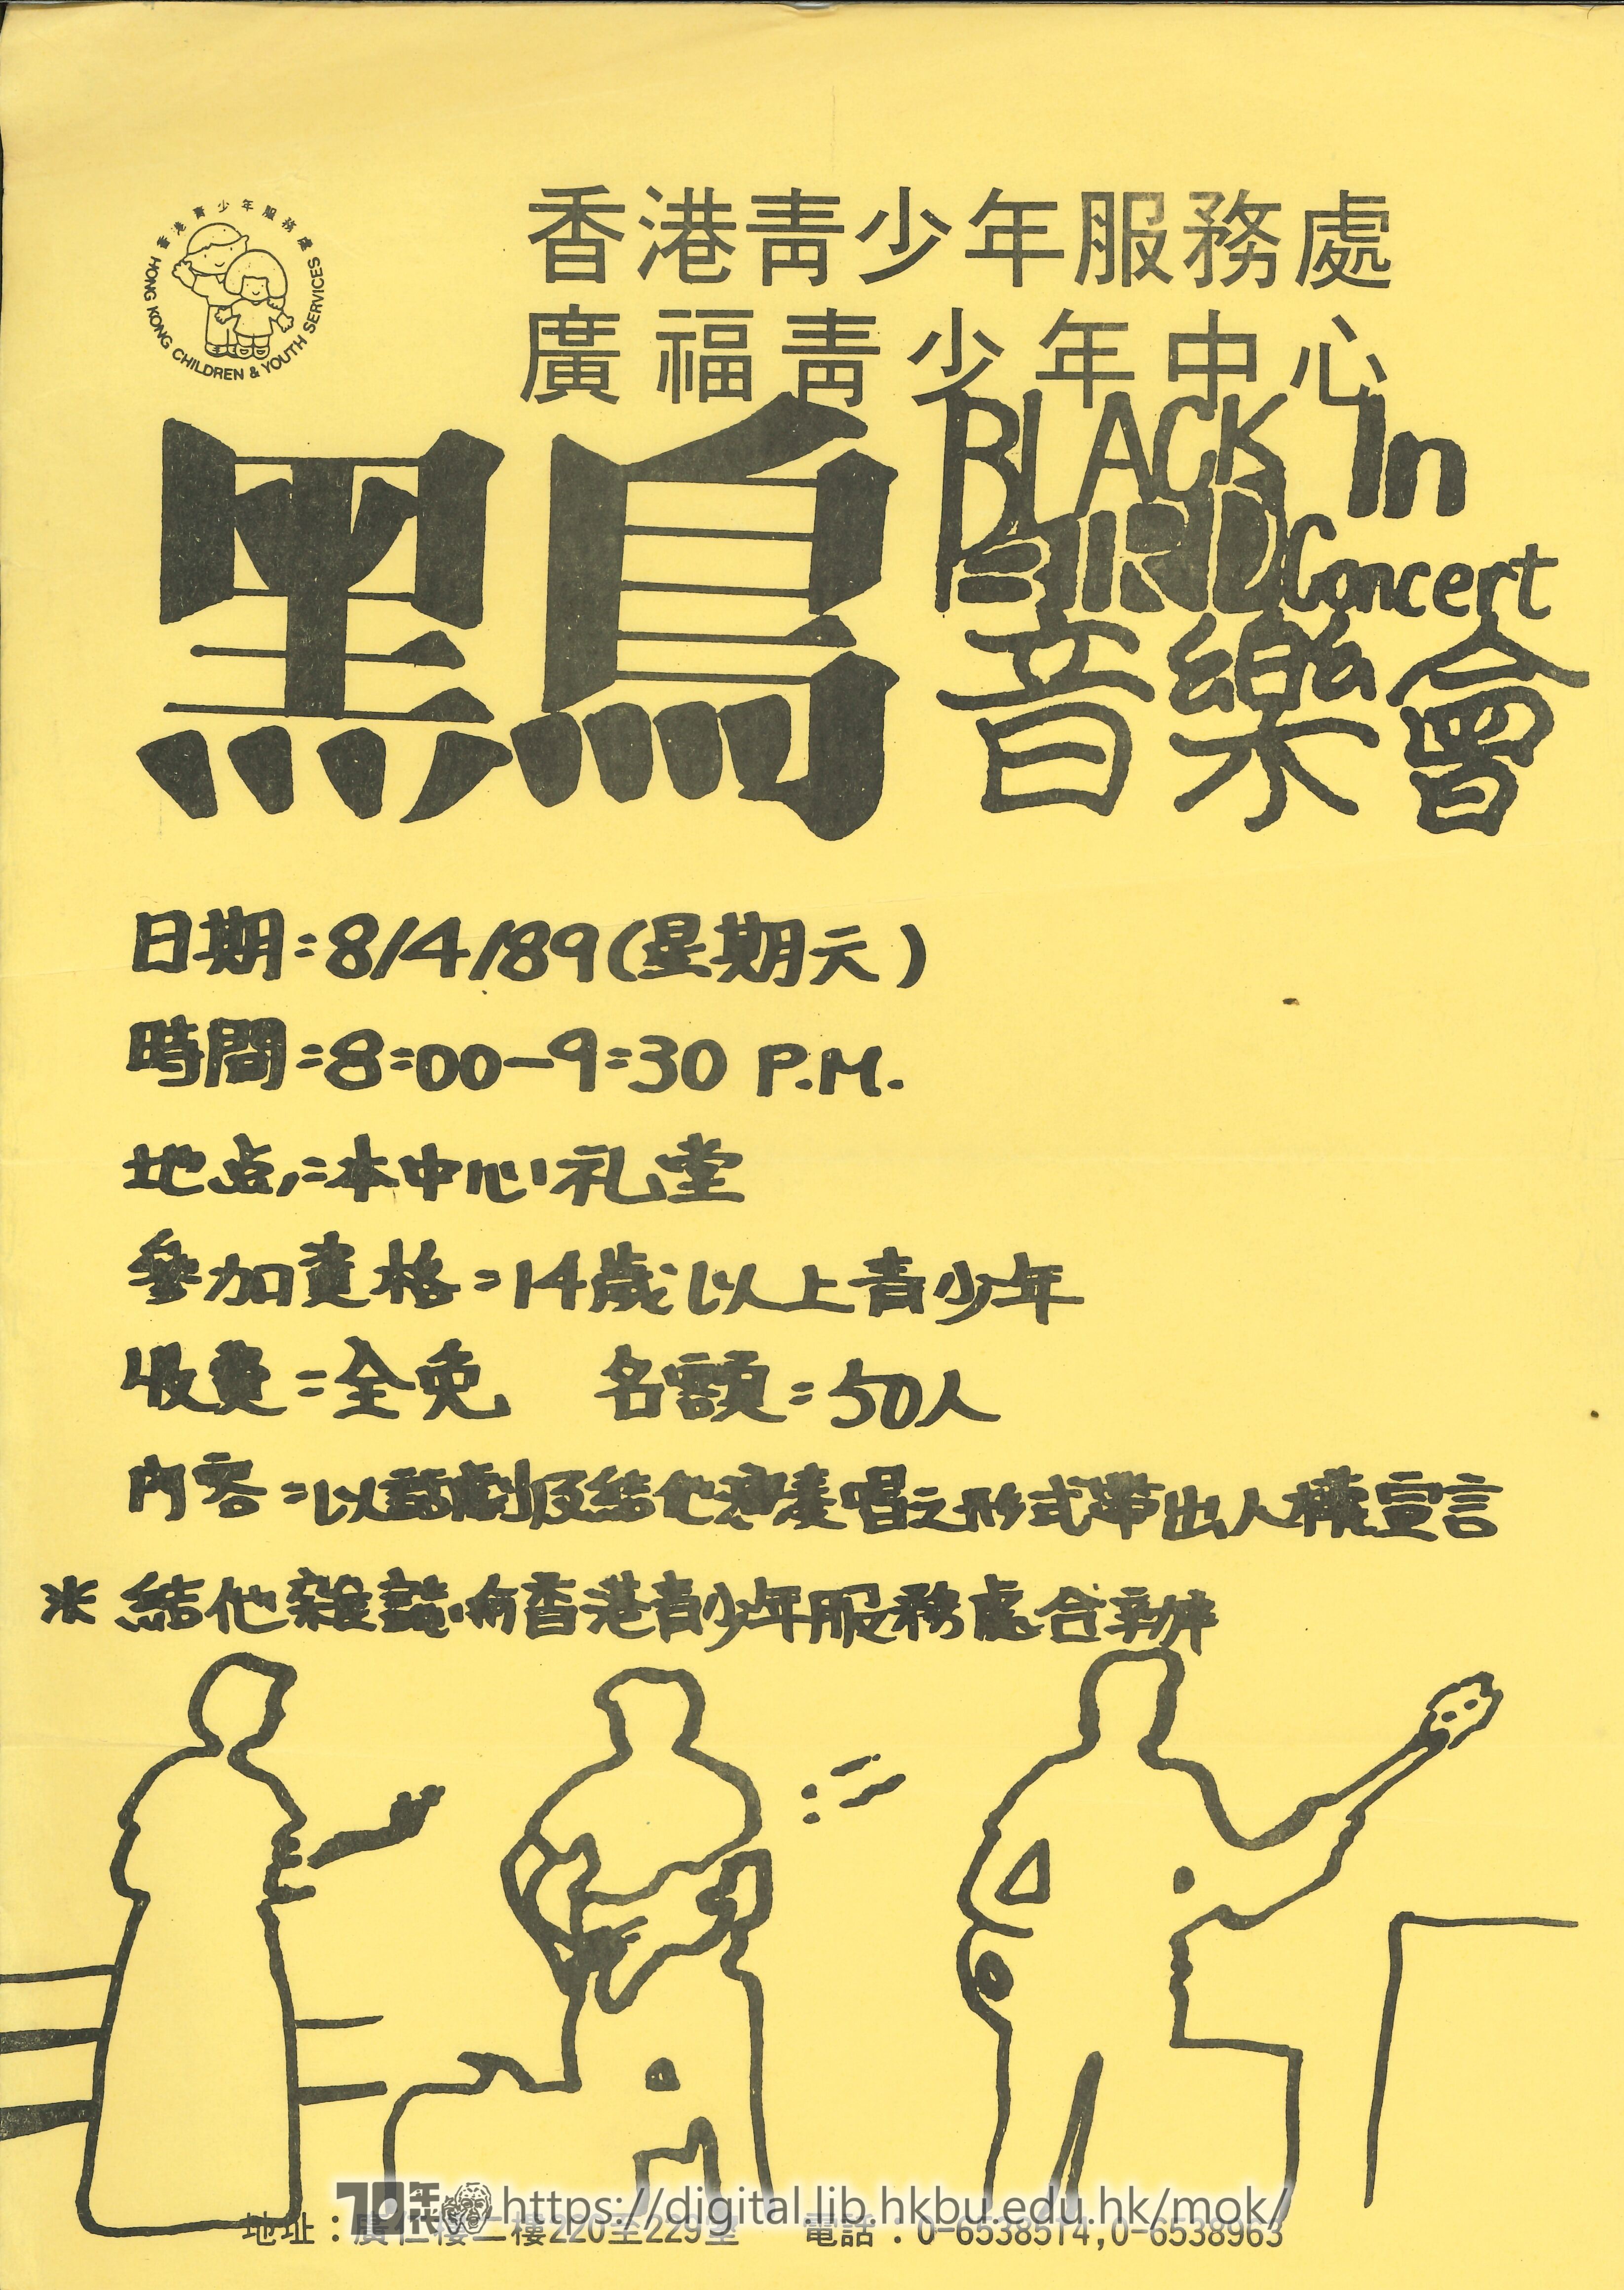 Blackbird  黑鳥音樂會海報 （香港青少年服務處廣福青少年中心）  